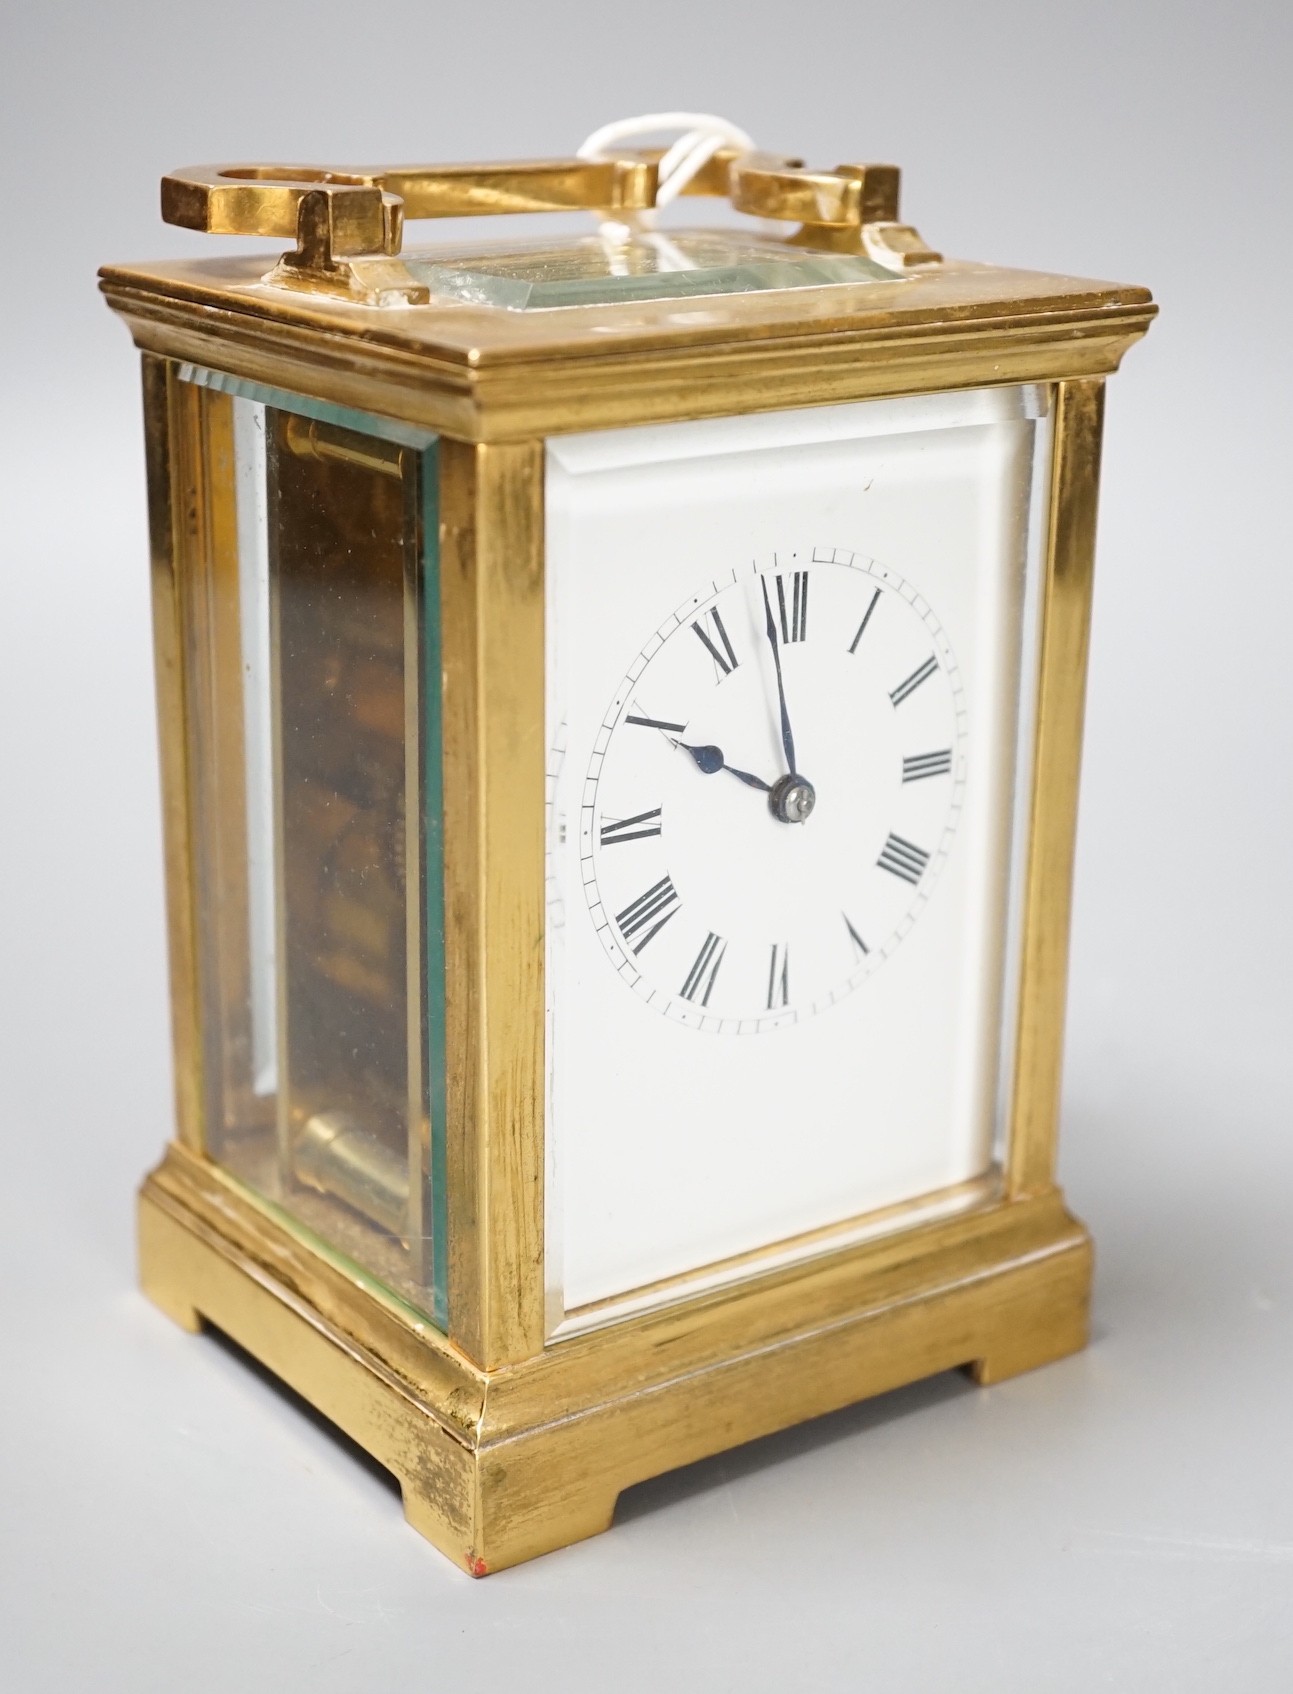 A brass carriage timepiece